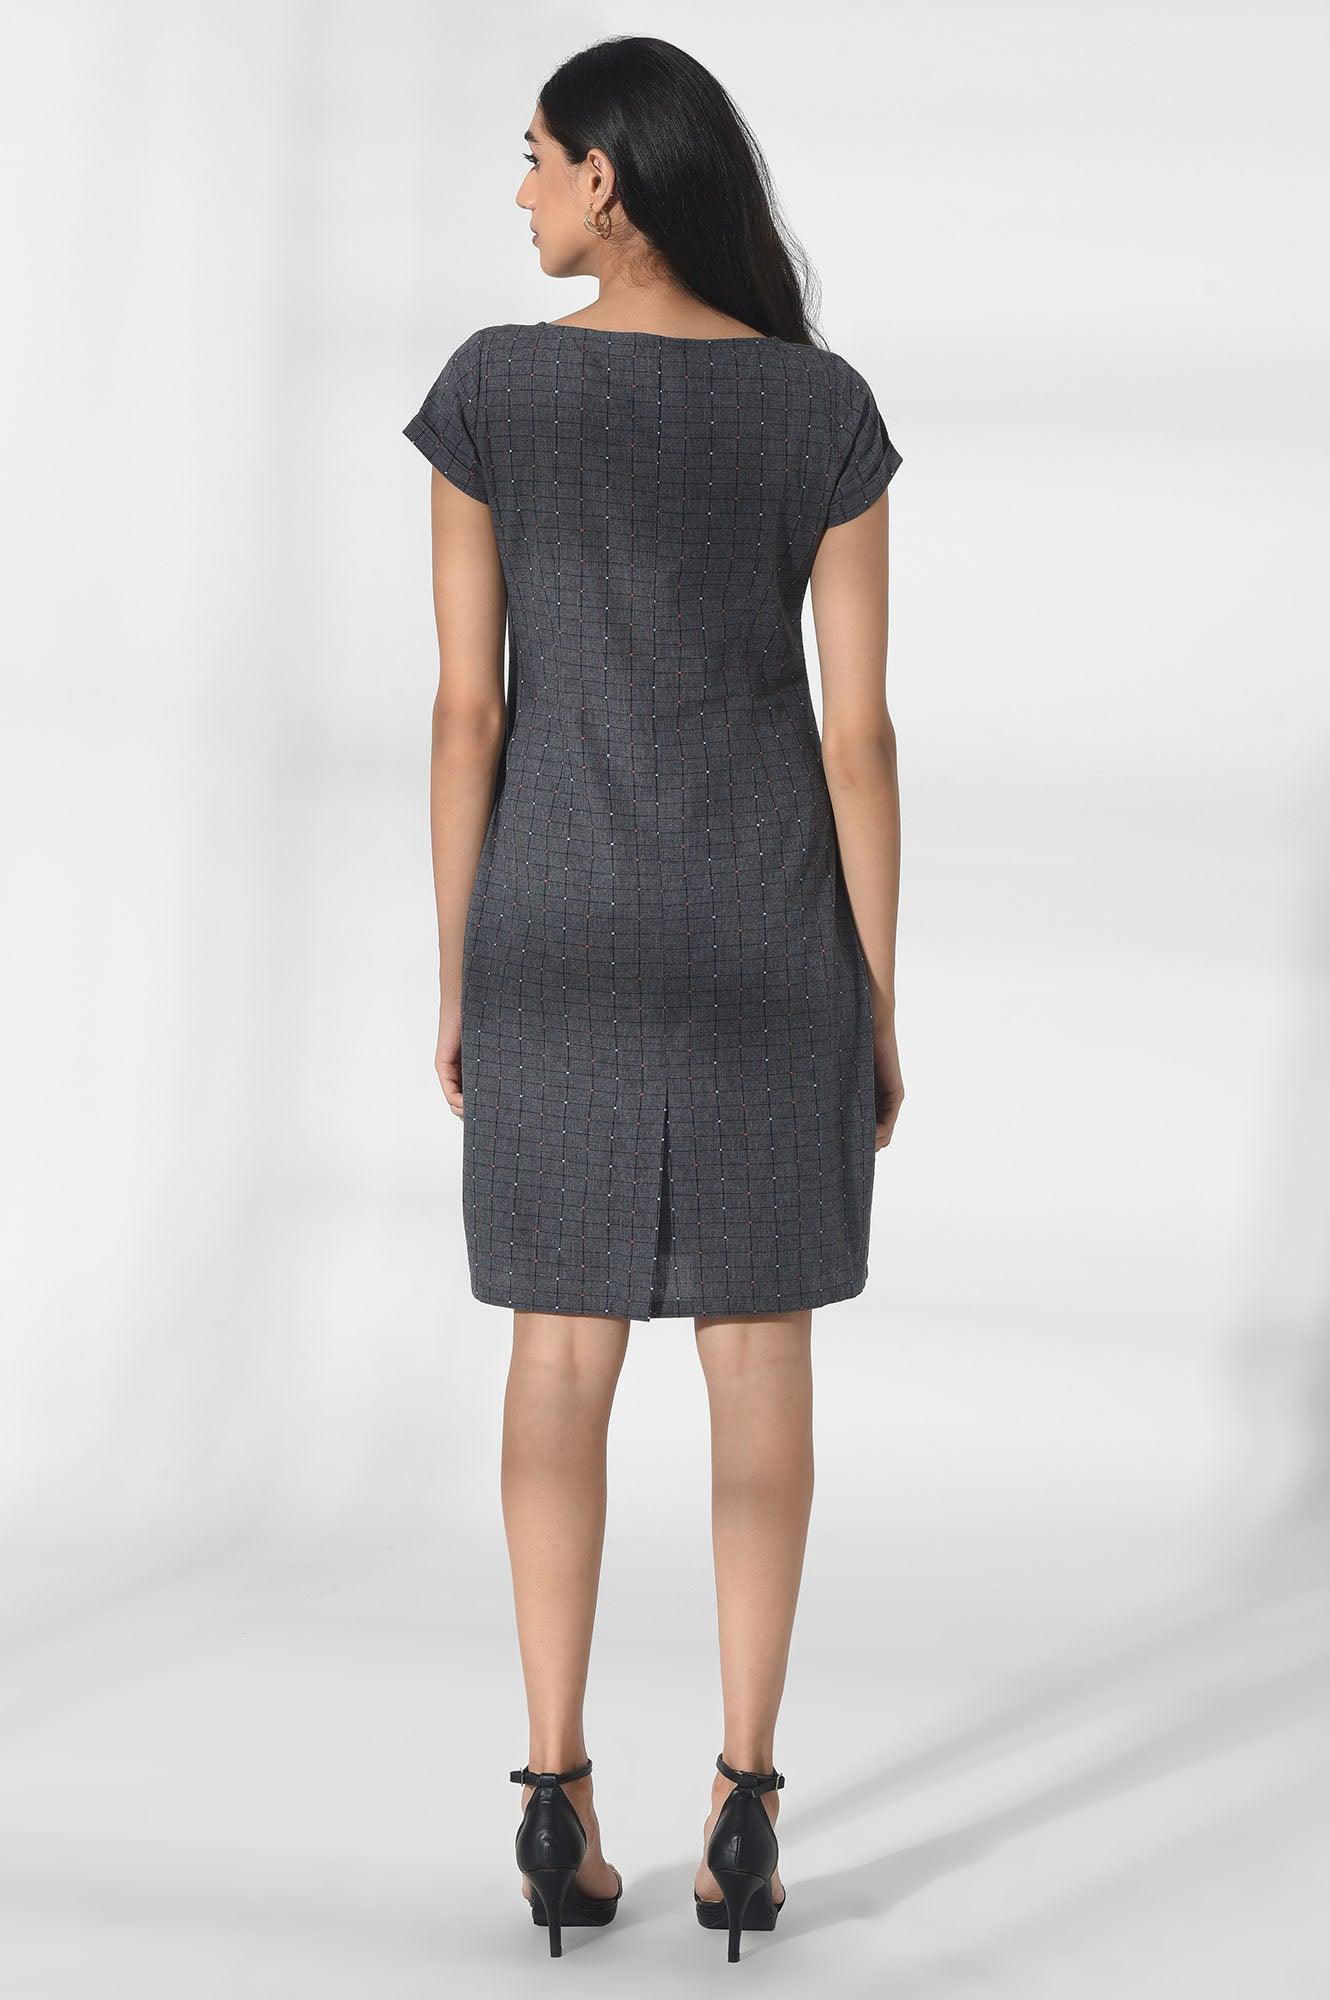 Dark Grey Sheath Dress with Embroidery - wforwoman